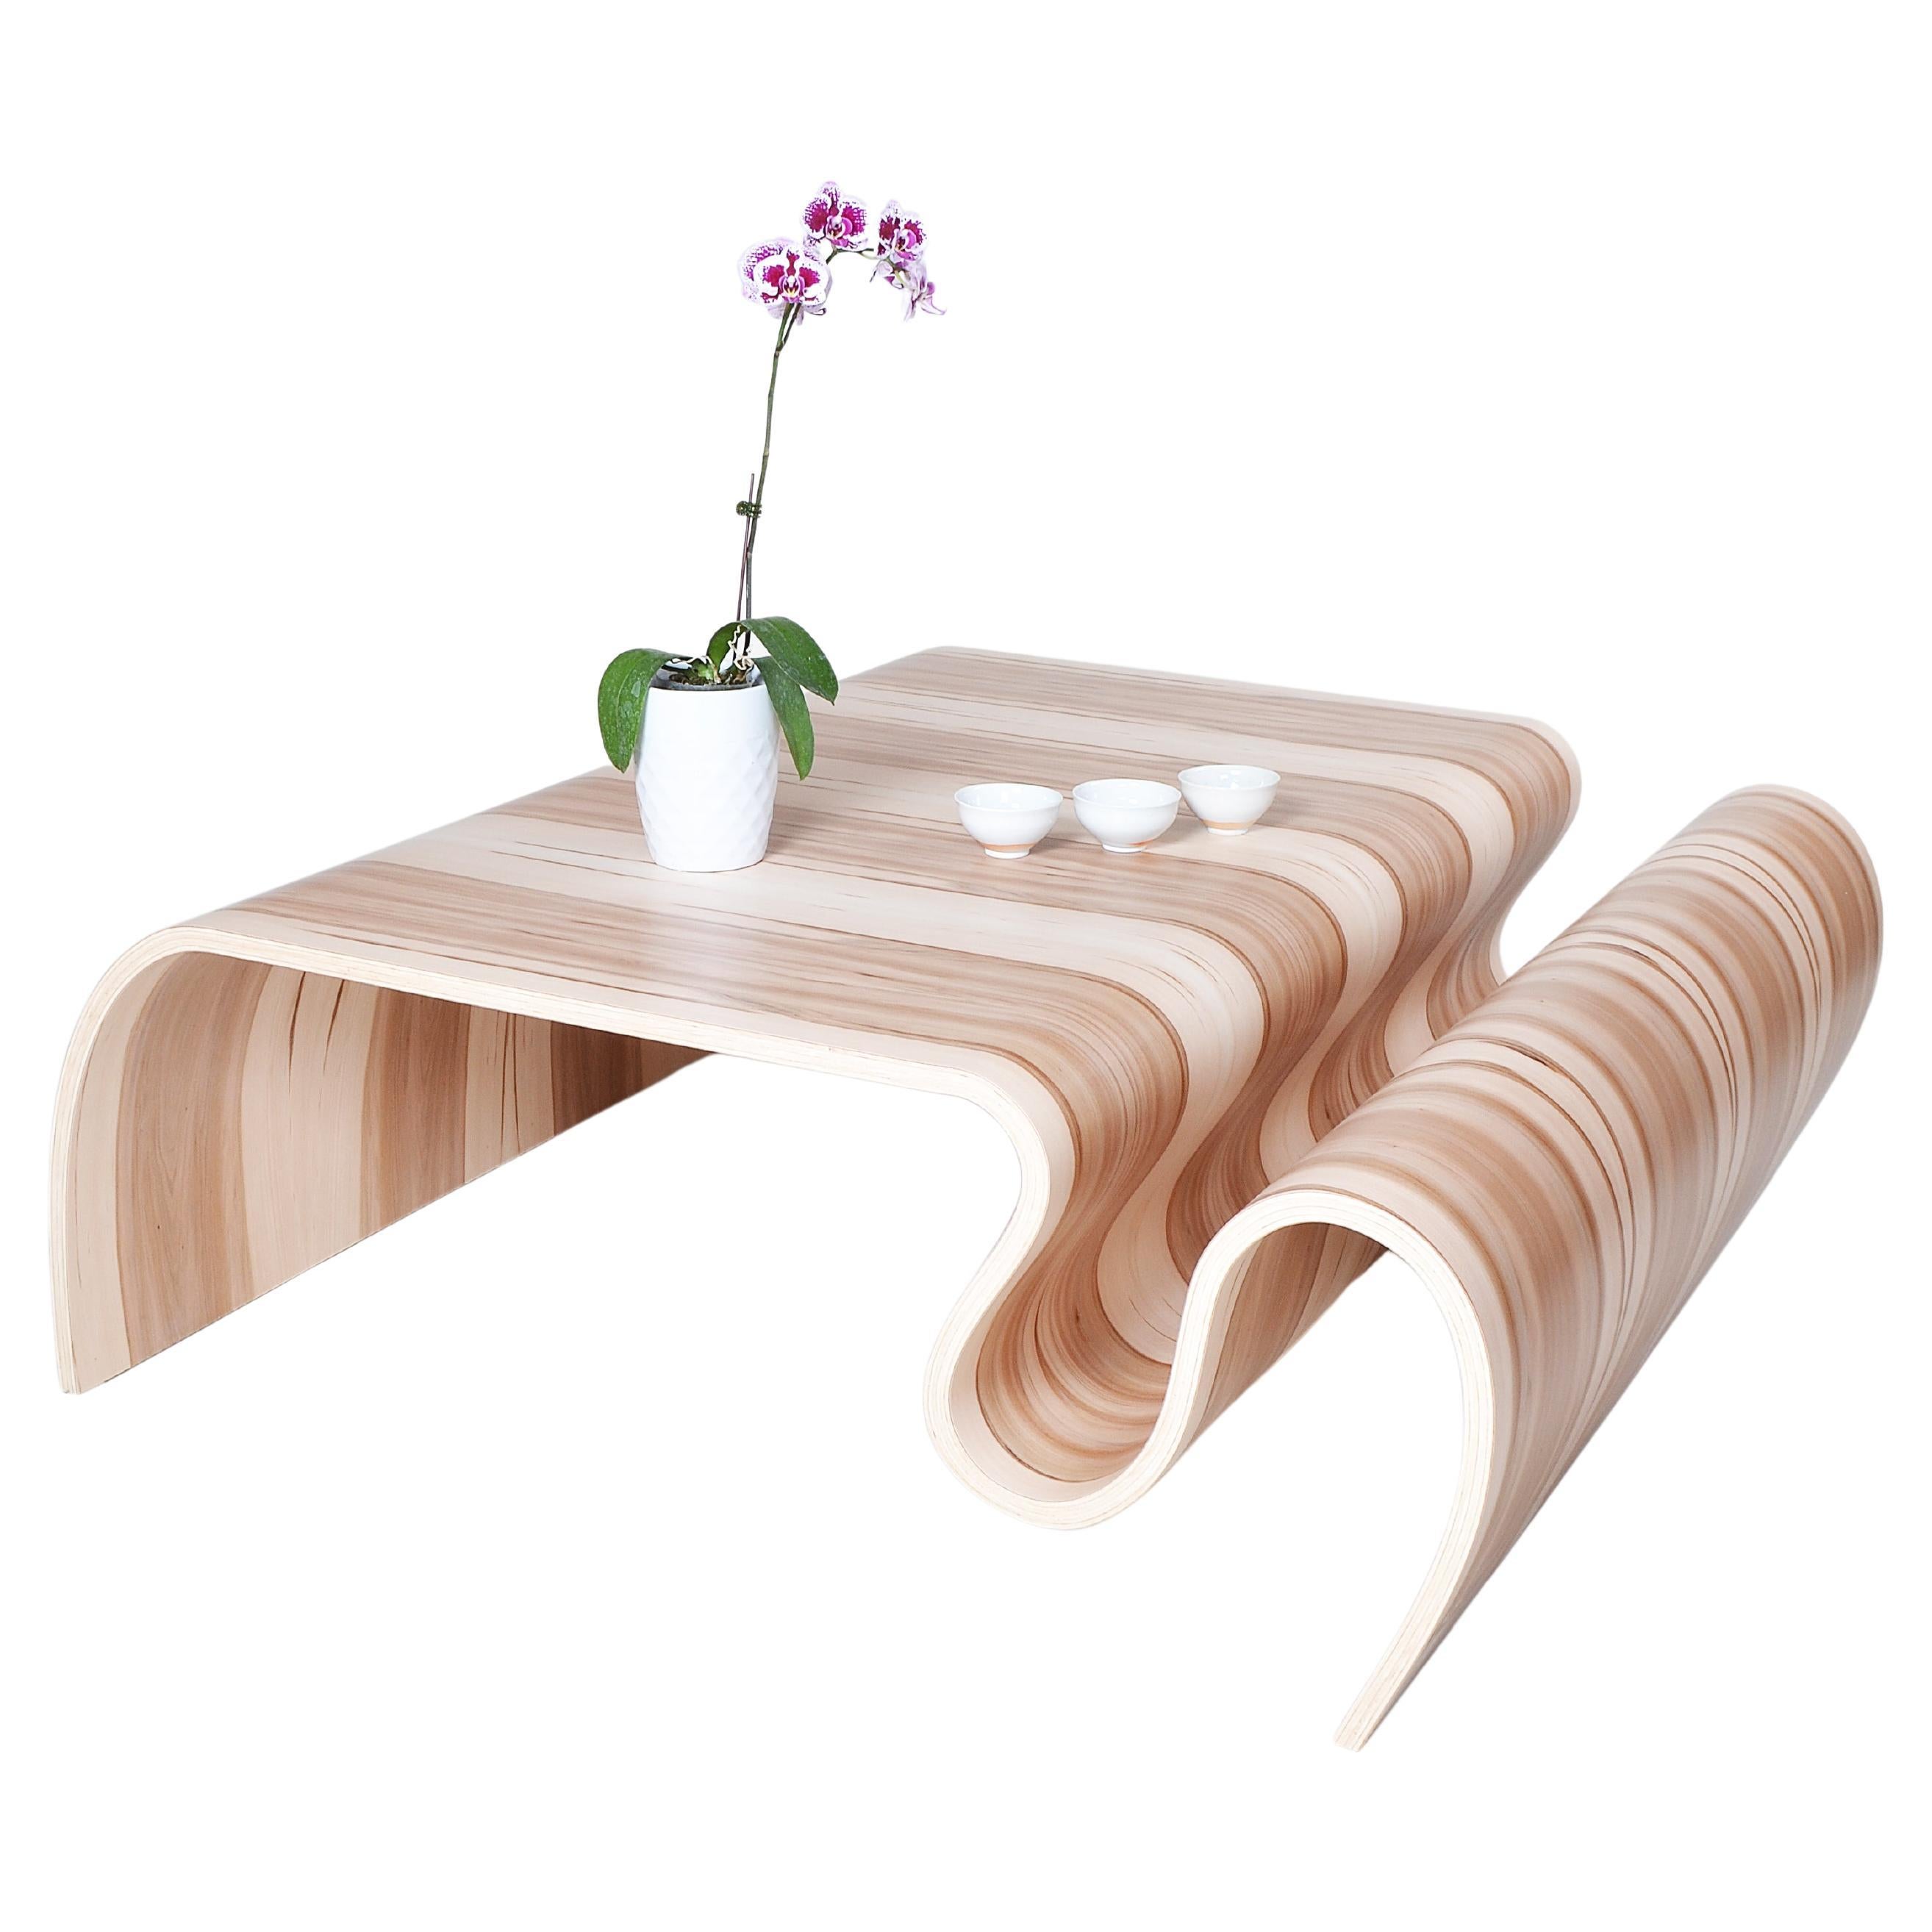 XLarge Crazy Carpet Table, Coffee Table, Handmade